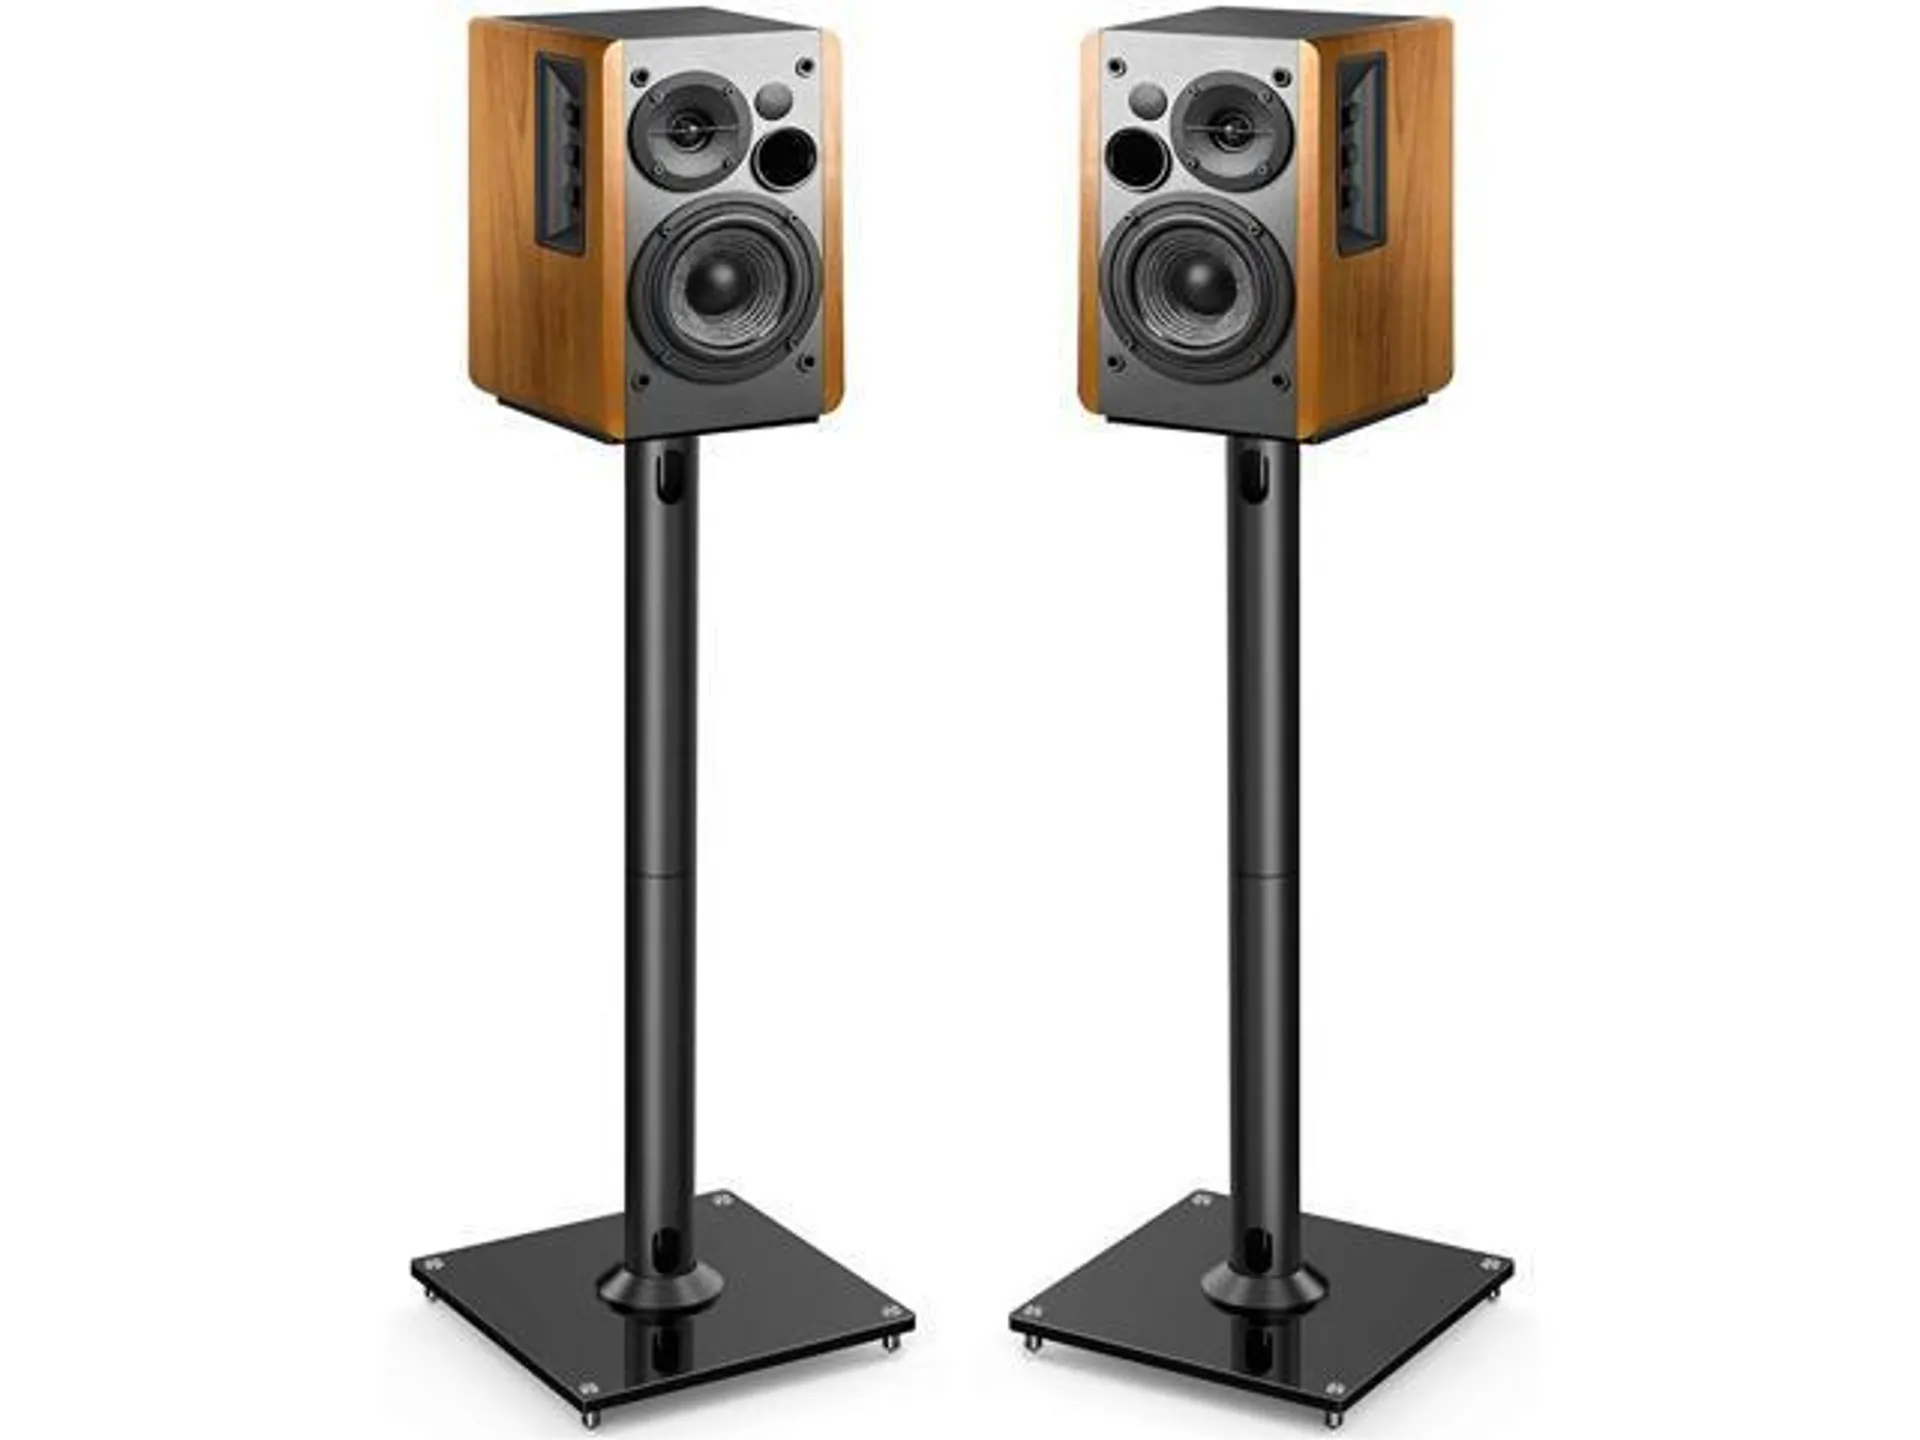 PIPISHELL Universal Floor Speaker Stands 26 Inch for Surround Sound, Klipsch, Sony, Edifier, Yamaha, Polk & Other Bookshelf Speakers Weight up to 22lbs - 1 Pair